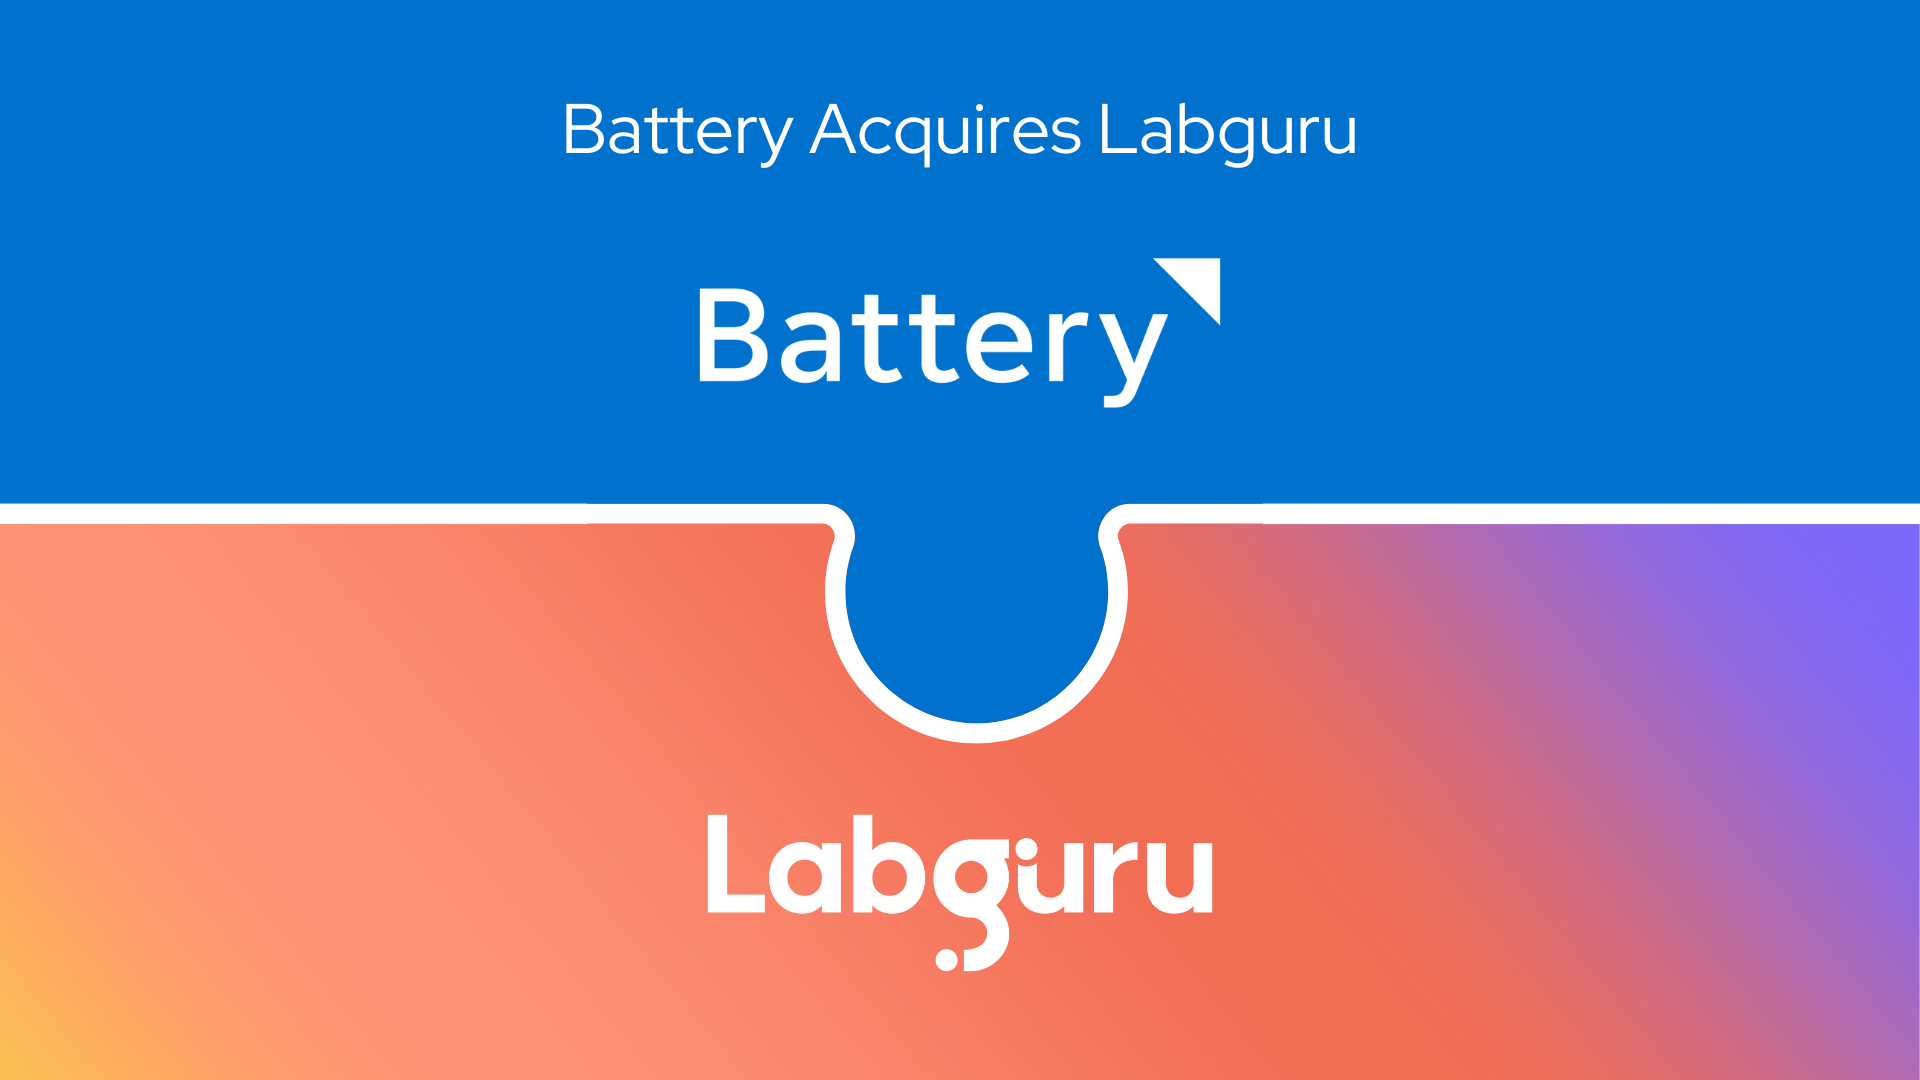 Battery acquires Labguru